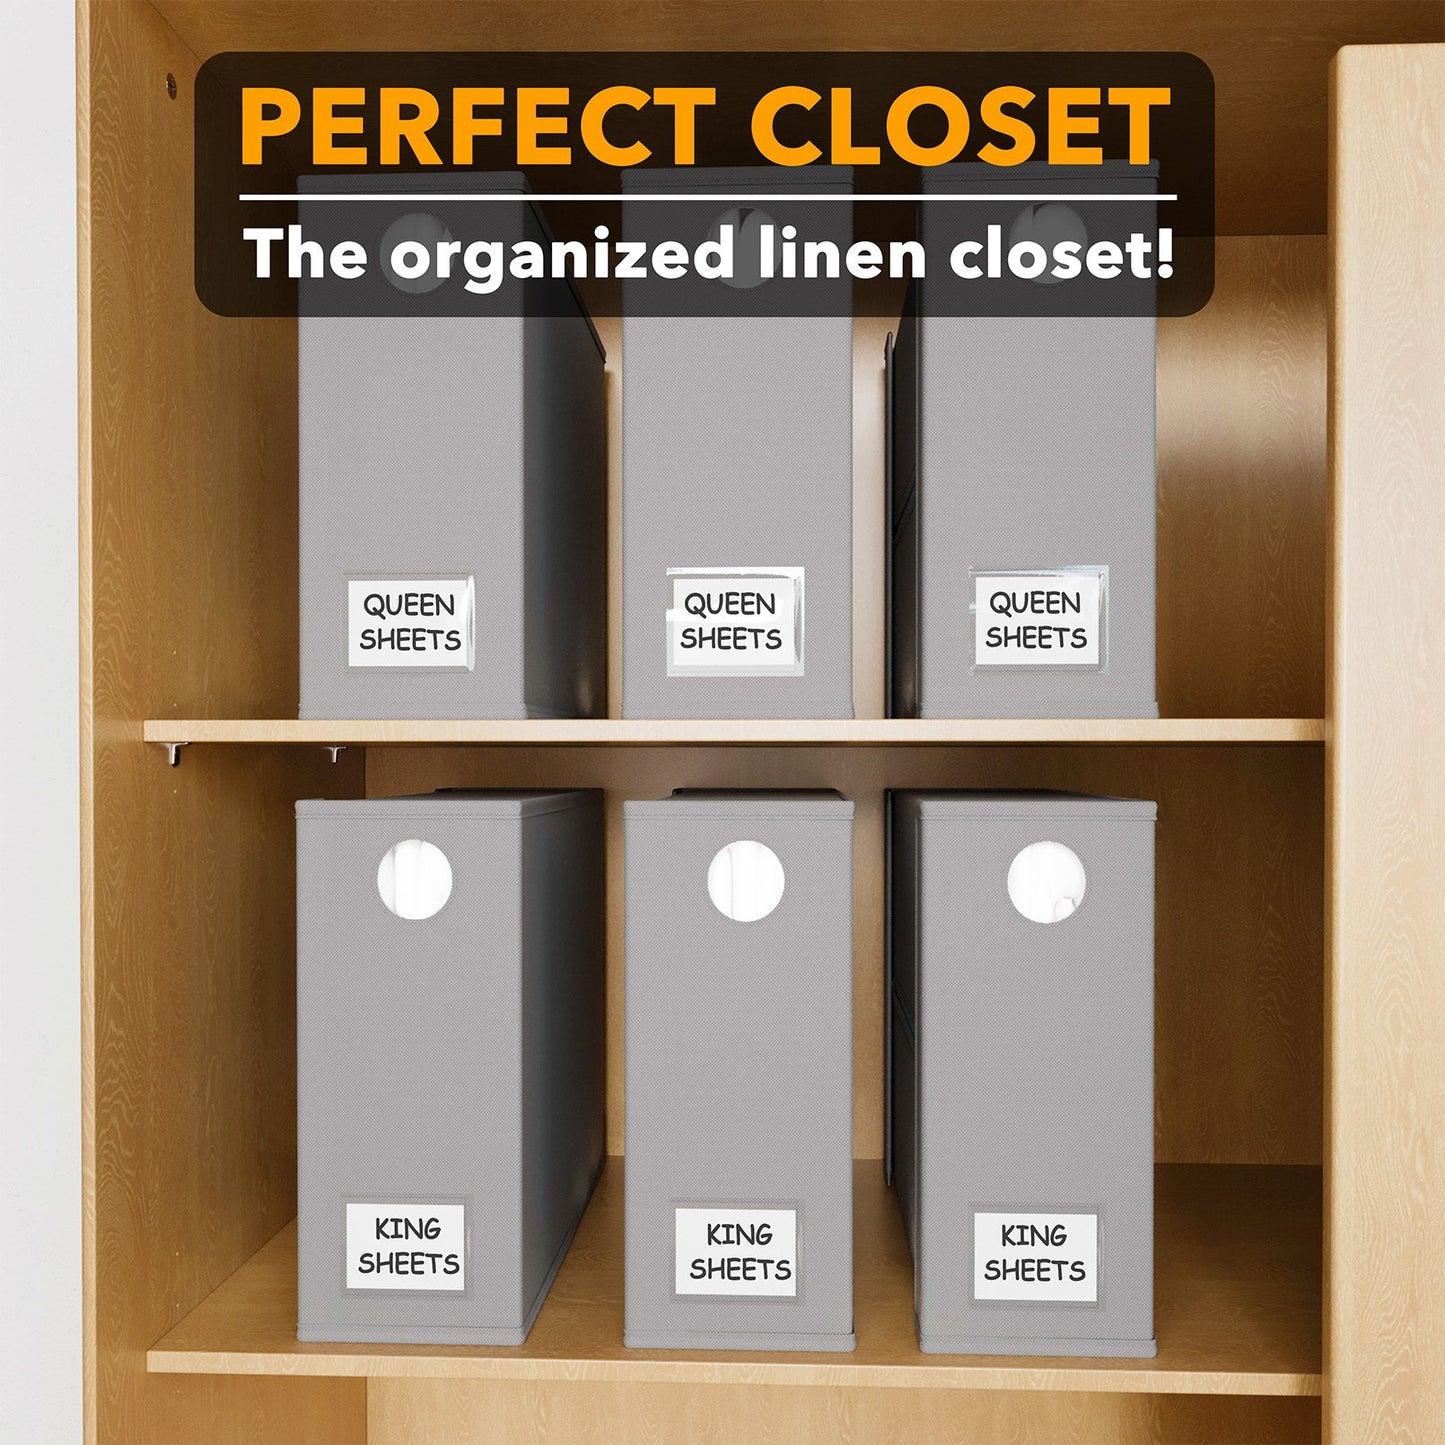 Bed sheet organizer for closet